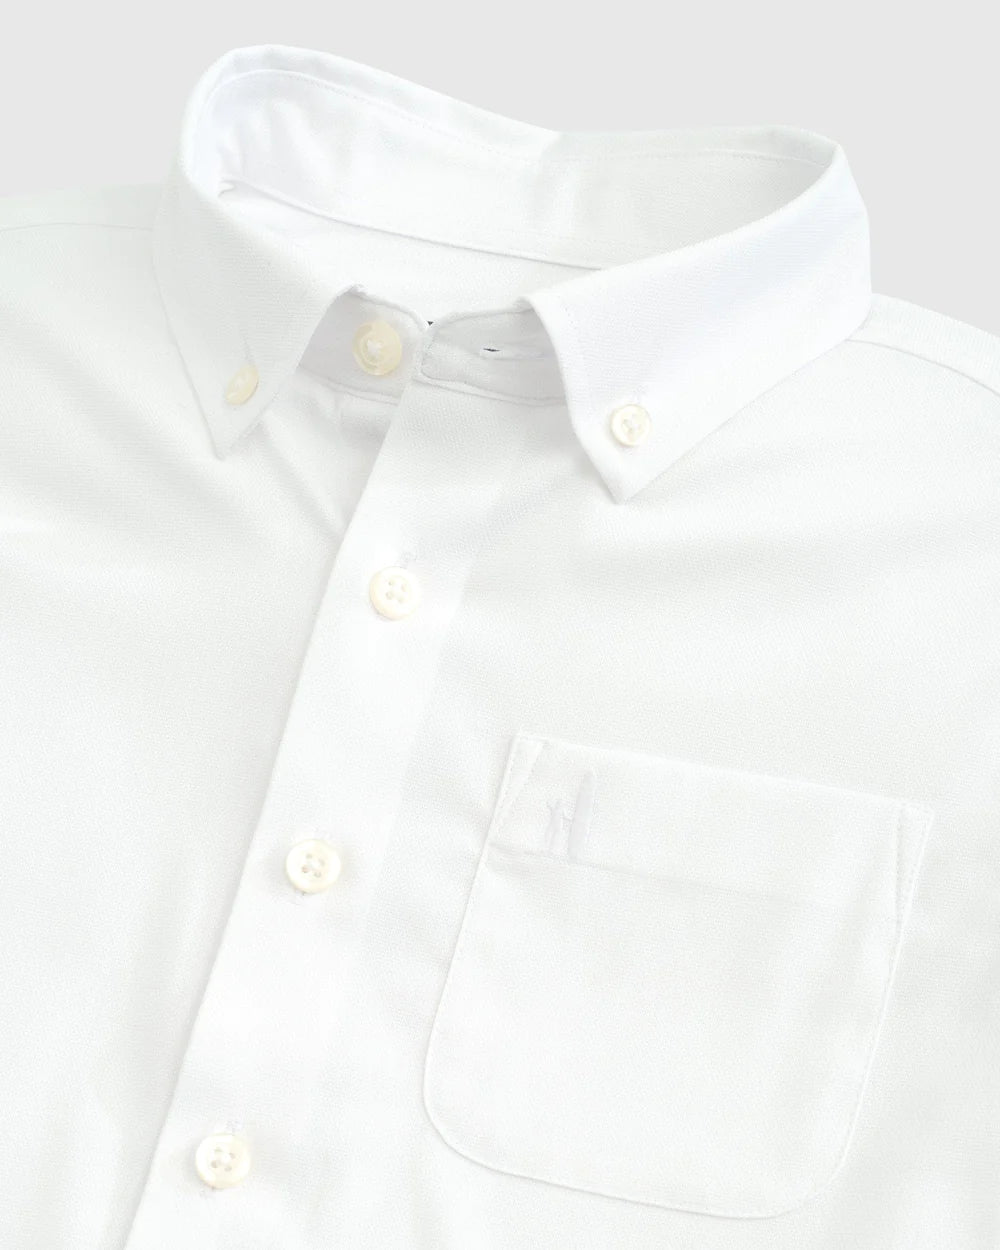 Johnnie-O Tradd Jr. Performance Button Up Shirt - White